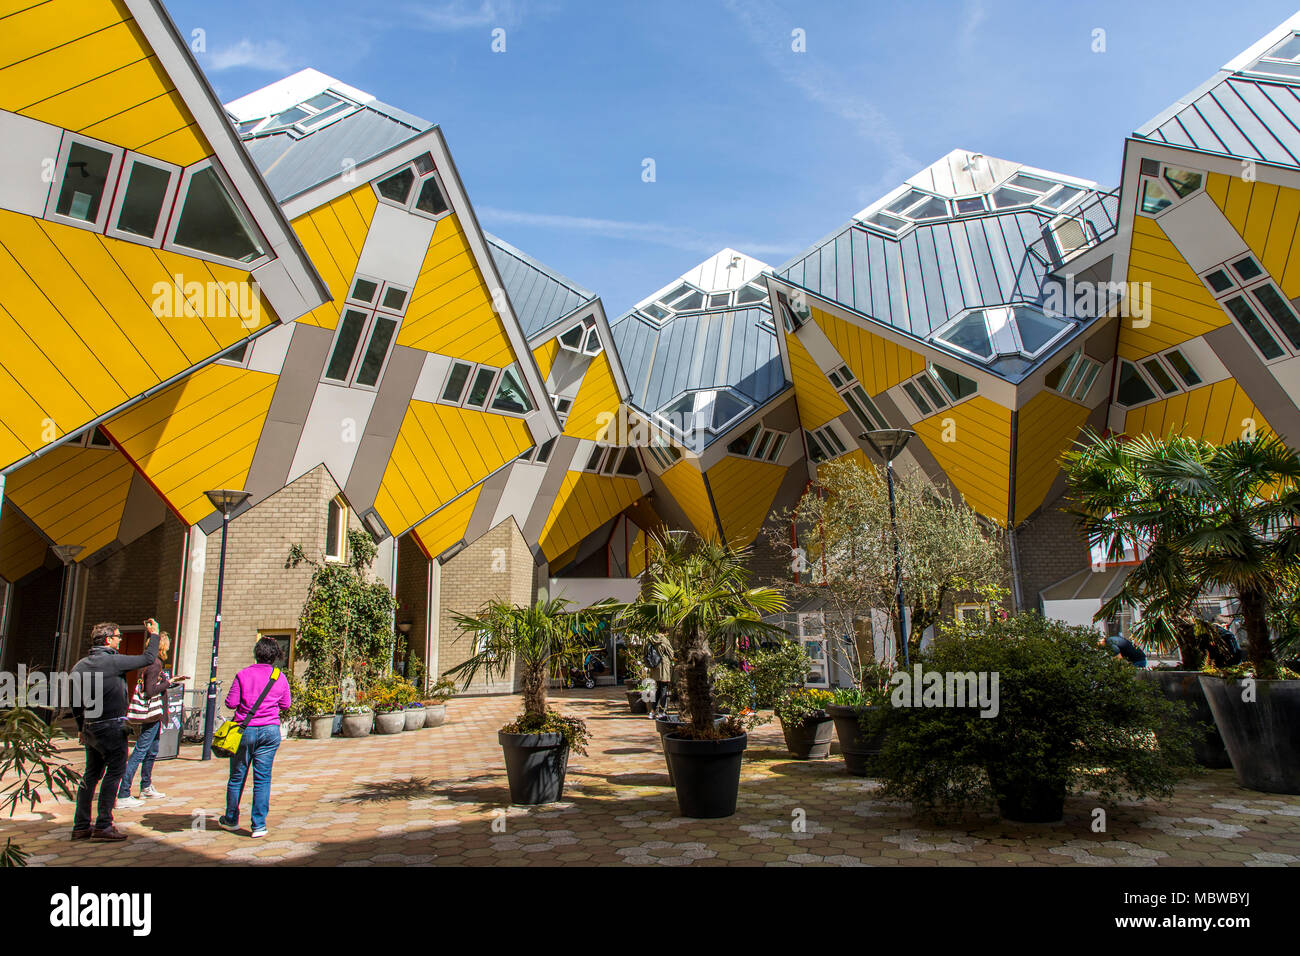 Alvast Eigenwijs mobiel Downtown, Blaak Square, Kubus residential building, and Kijk Kubus  cube-shaped houses, Netherlands, by the Dutch architect Piet Blom Stock  Photo - Alamy